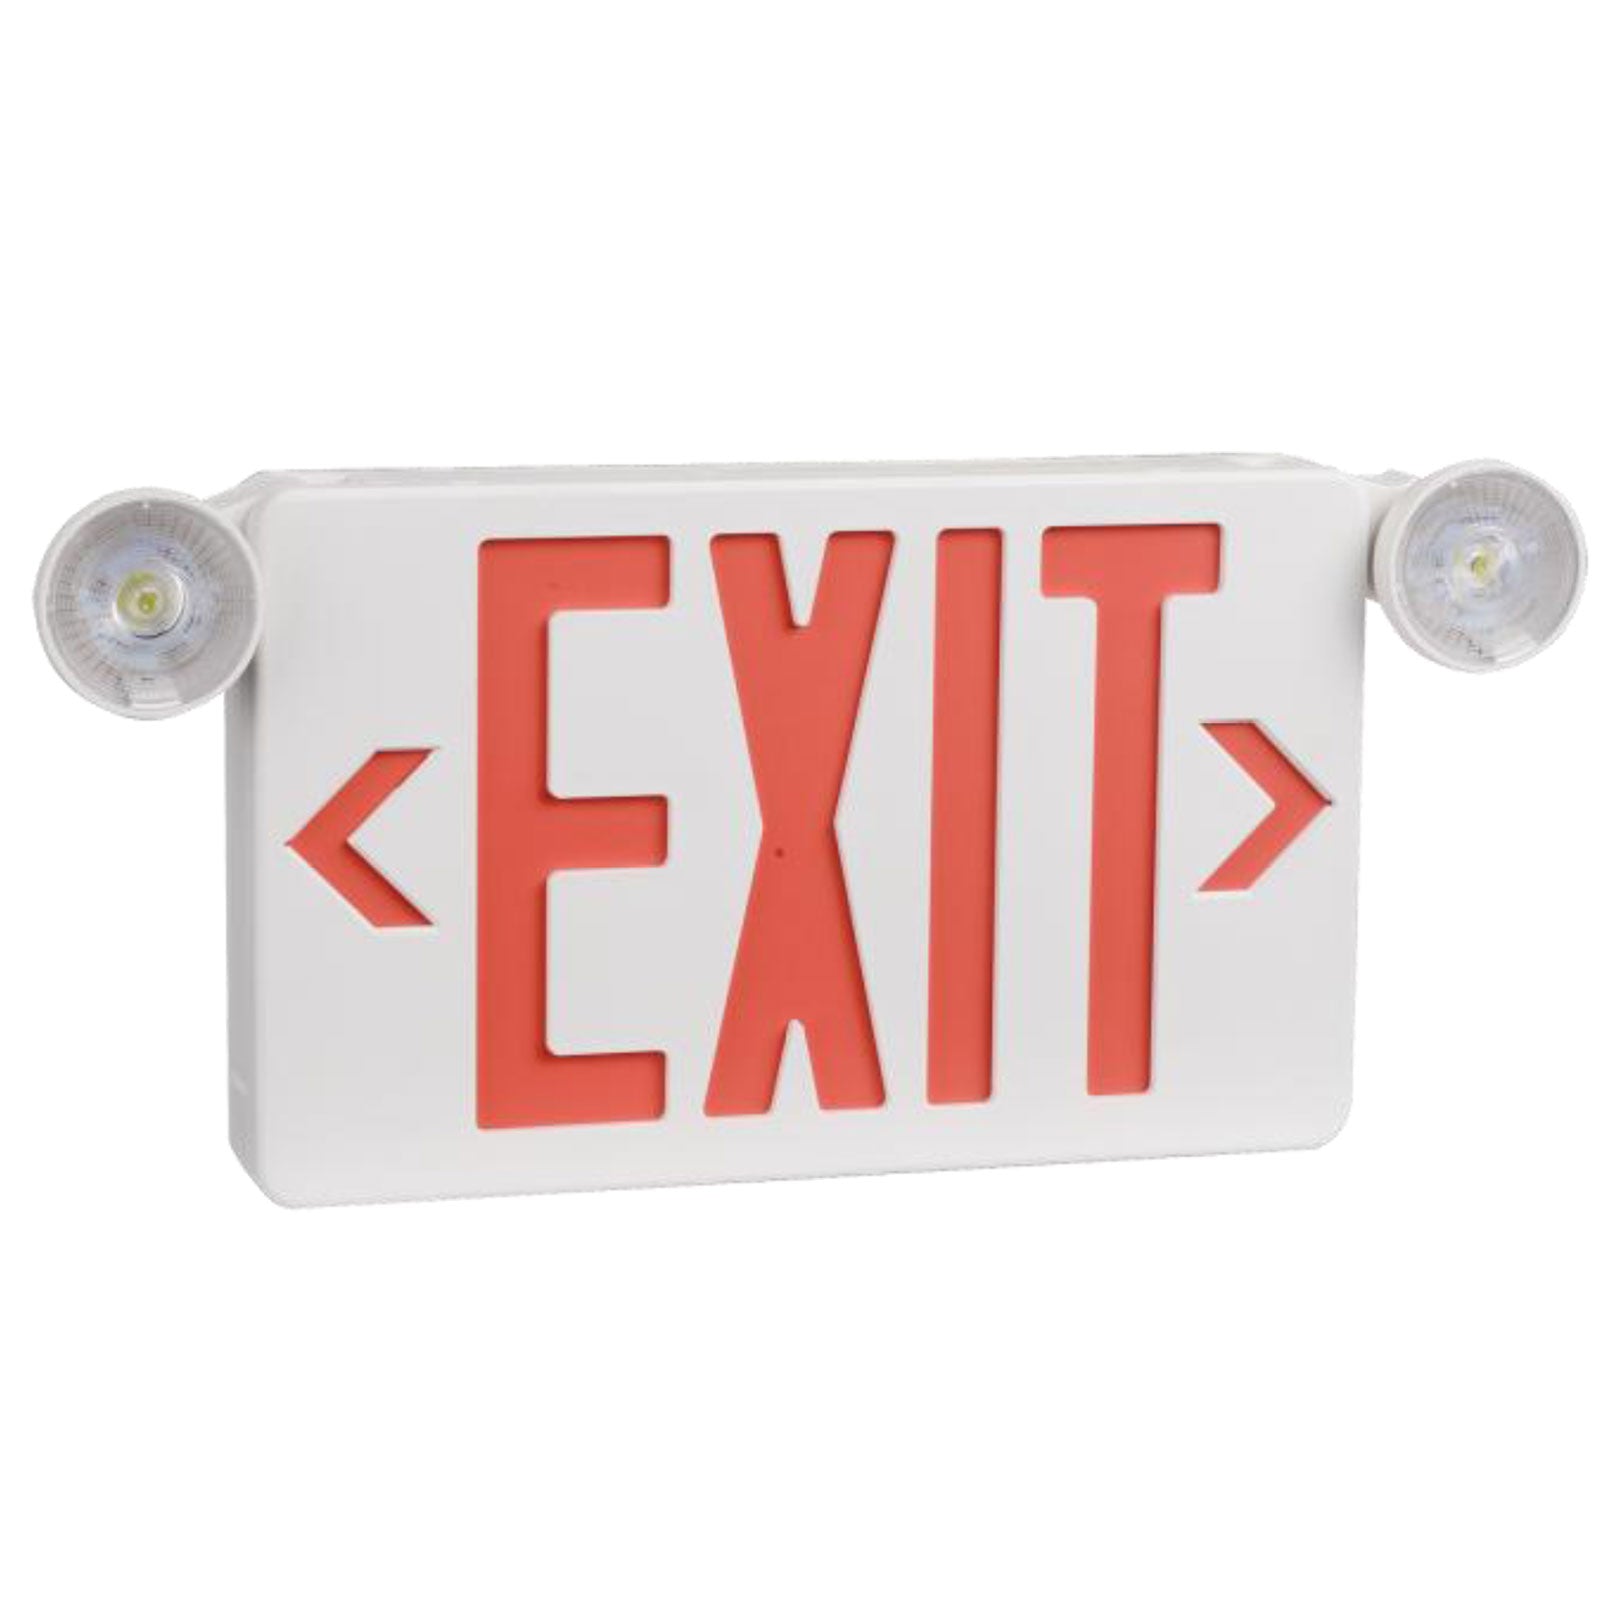 LED Exit Sign & Security Lights 3-Watt 120v-277v Rechargeable Battery, Red